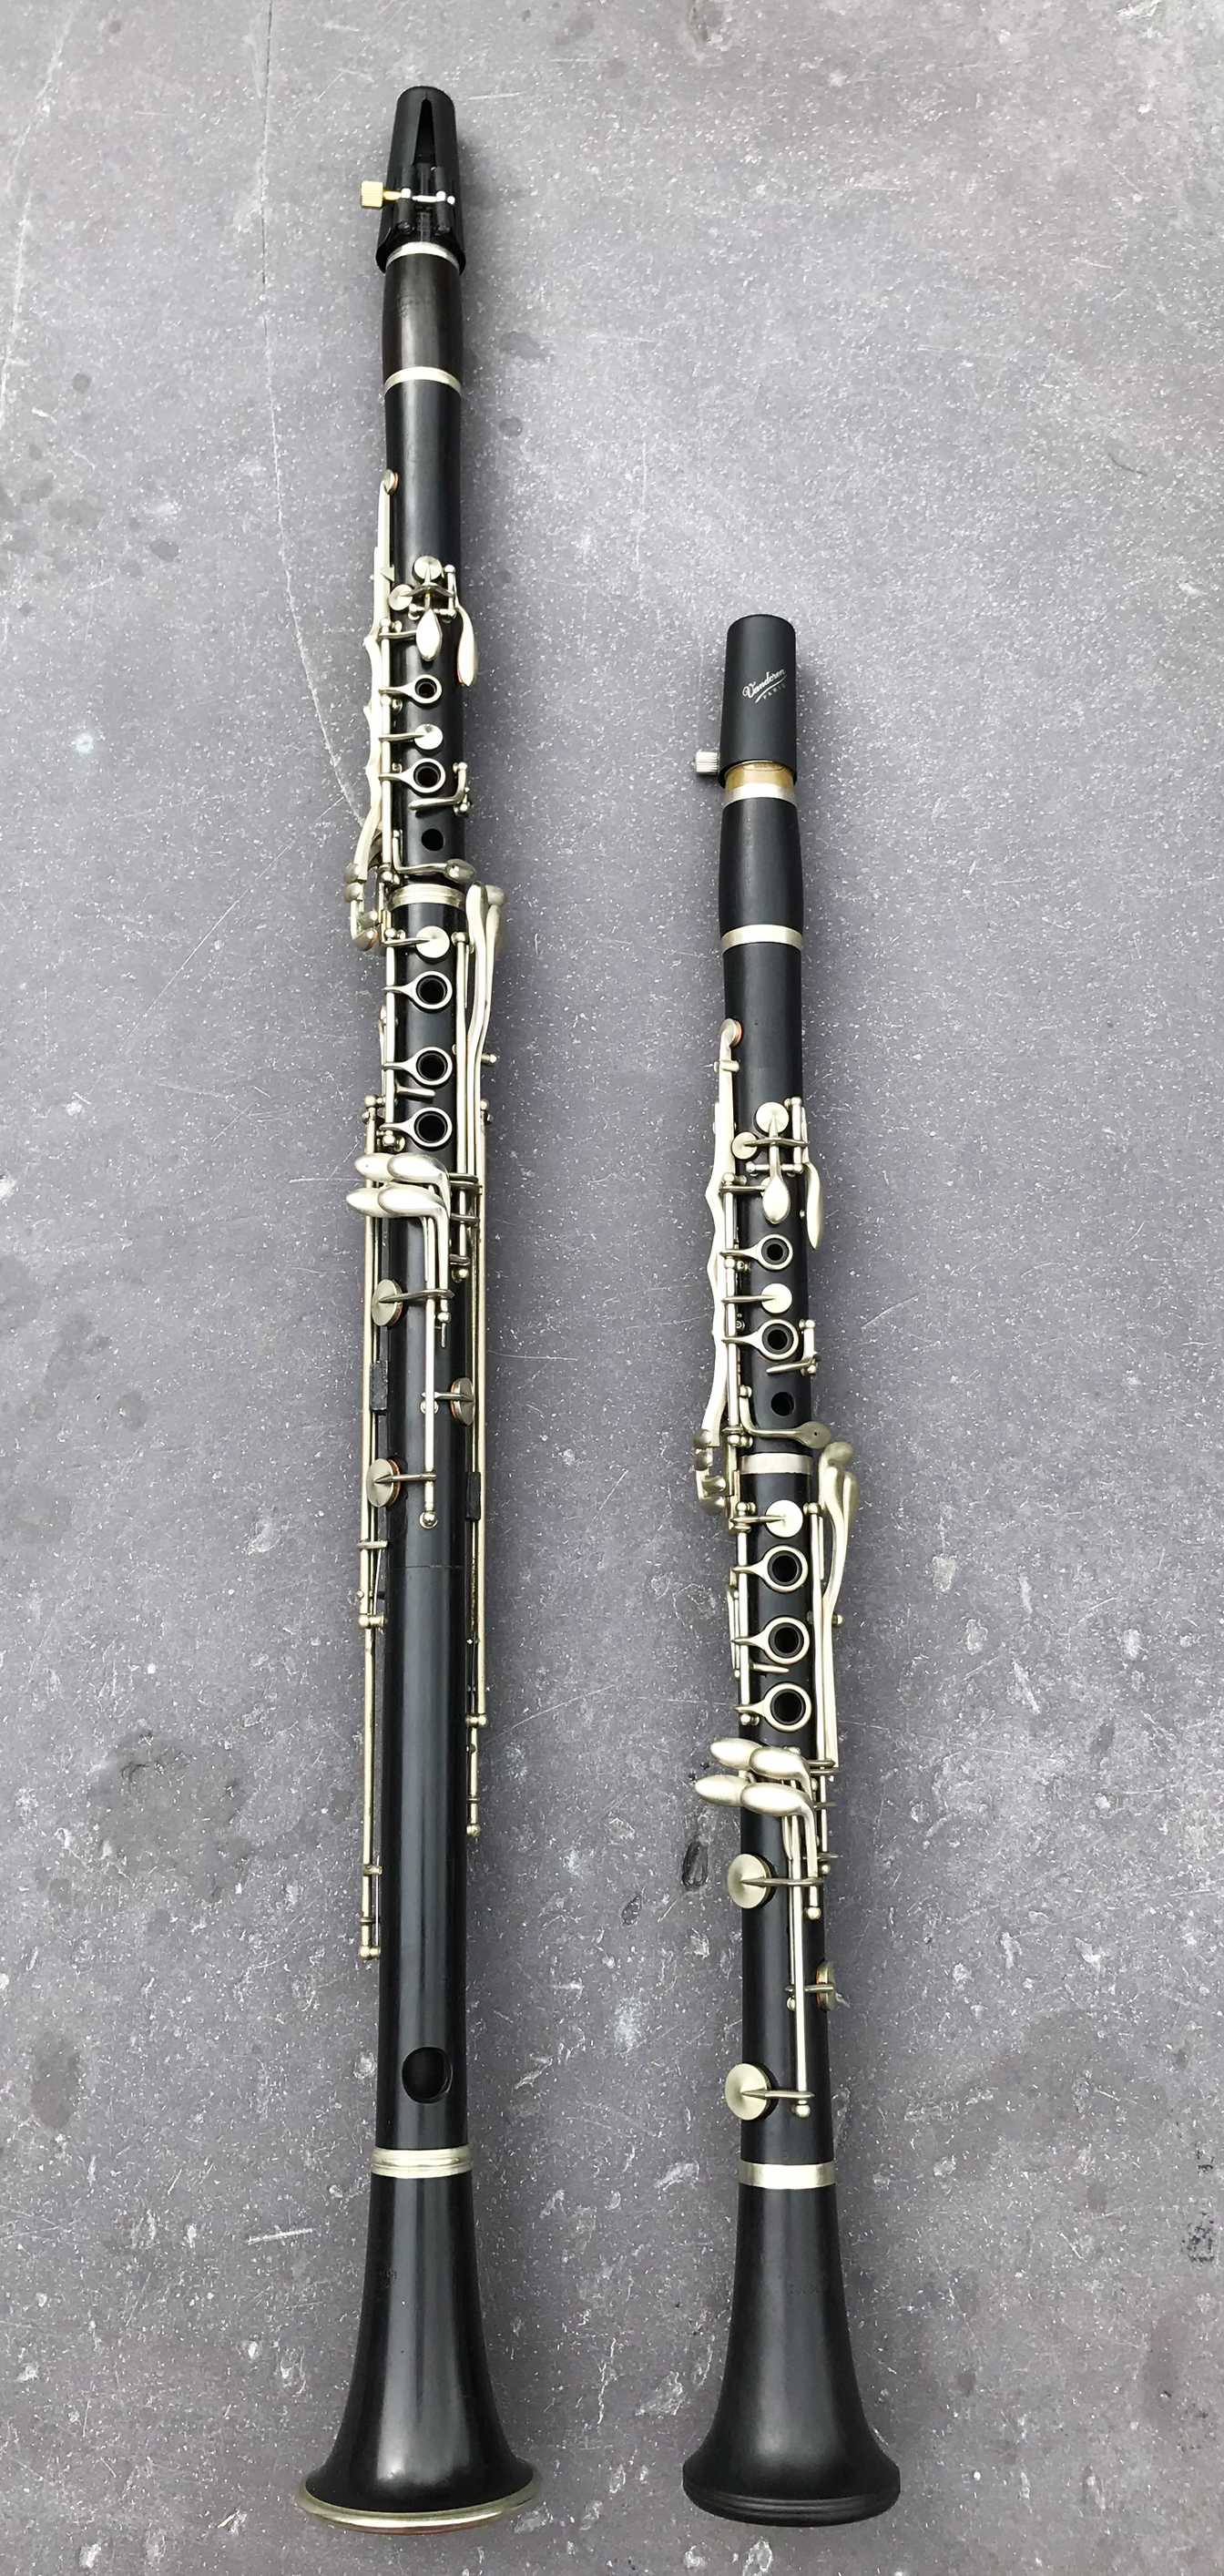 basset clarinet